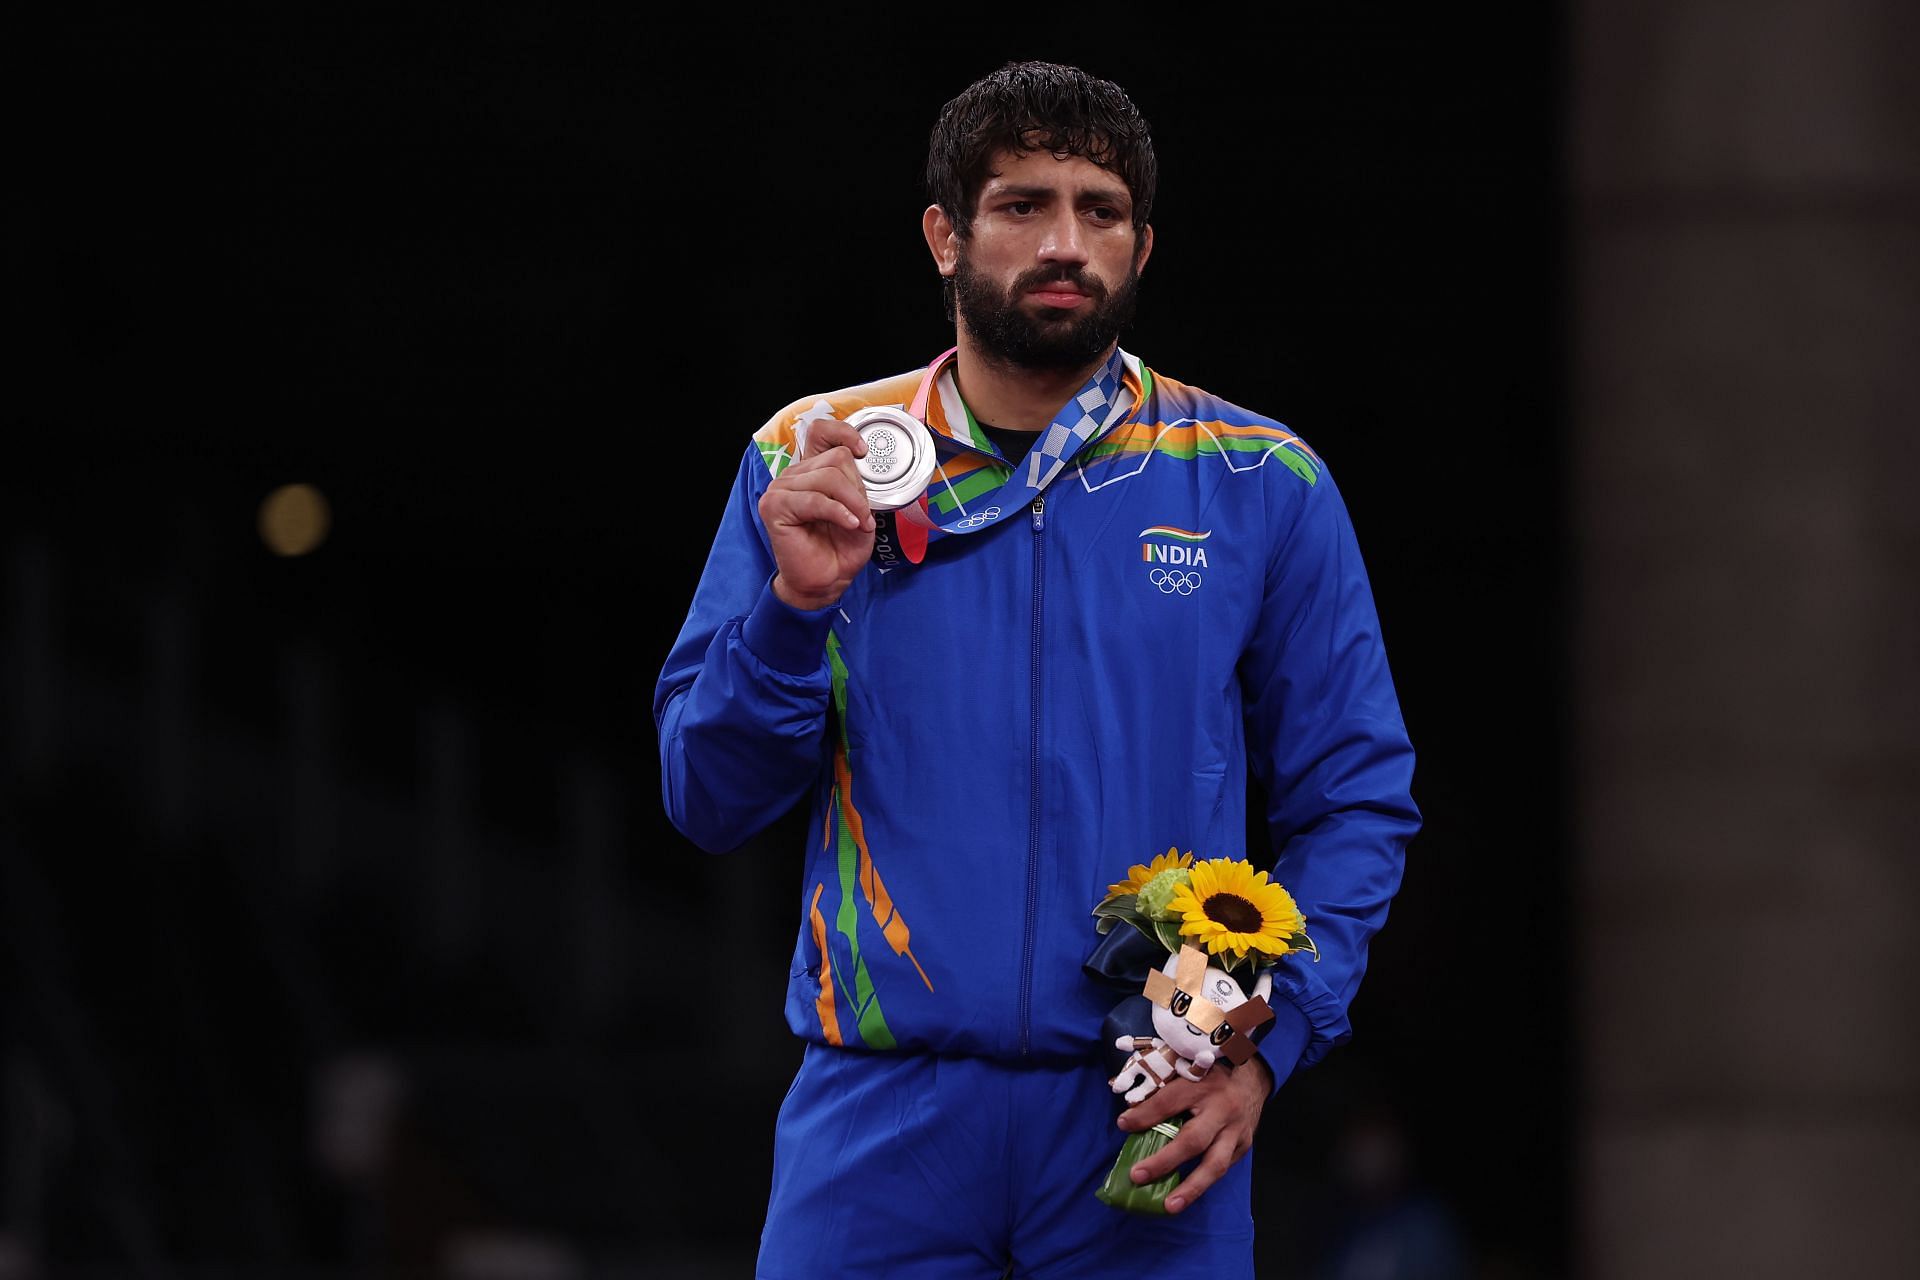 Ravi Dahiya won a silver medal at the Olympics.